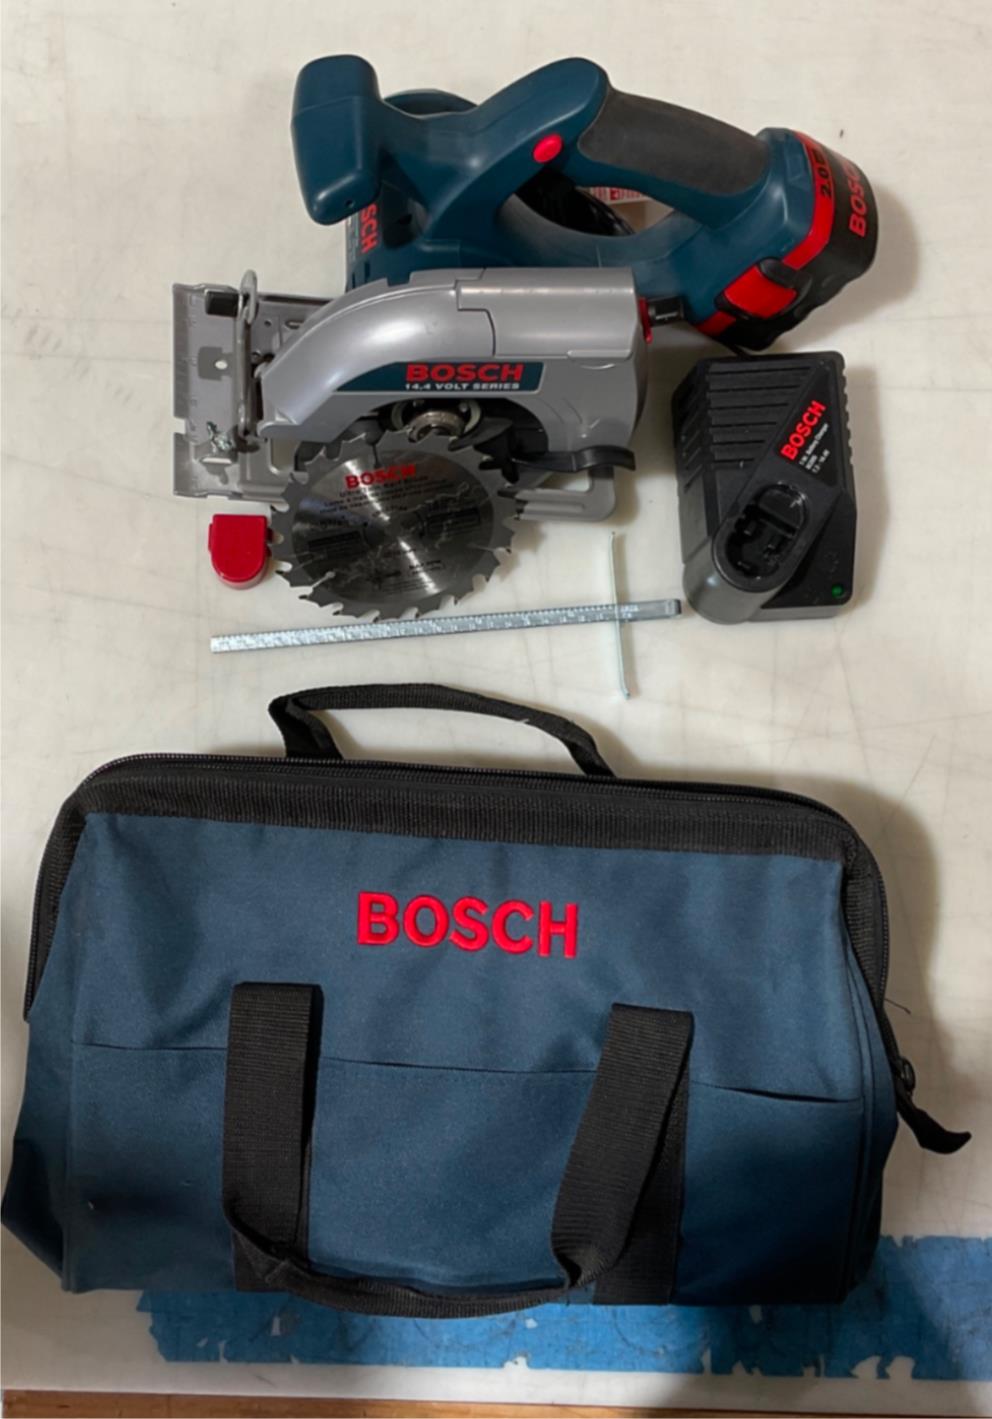 Bosch 1661 14.4V 5 3/8" Cordless Circular Saw w/carrying bag #36